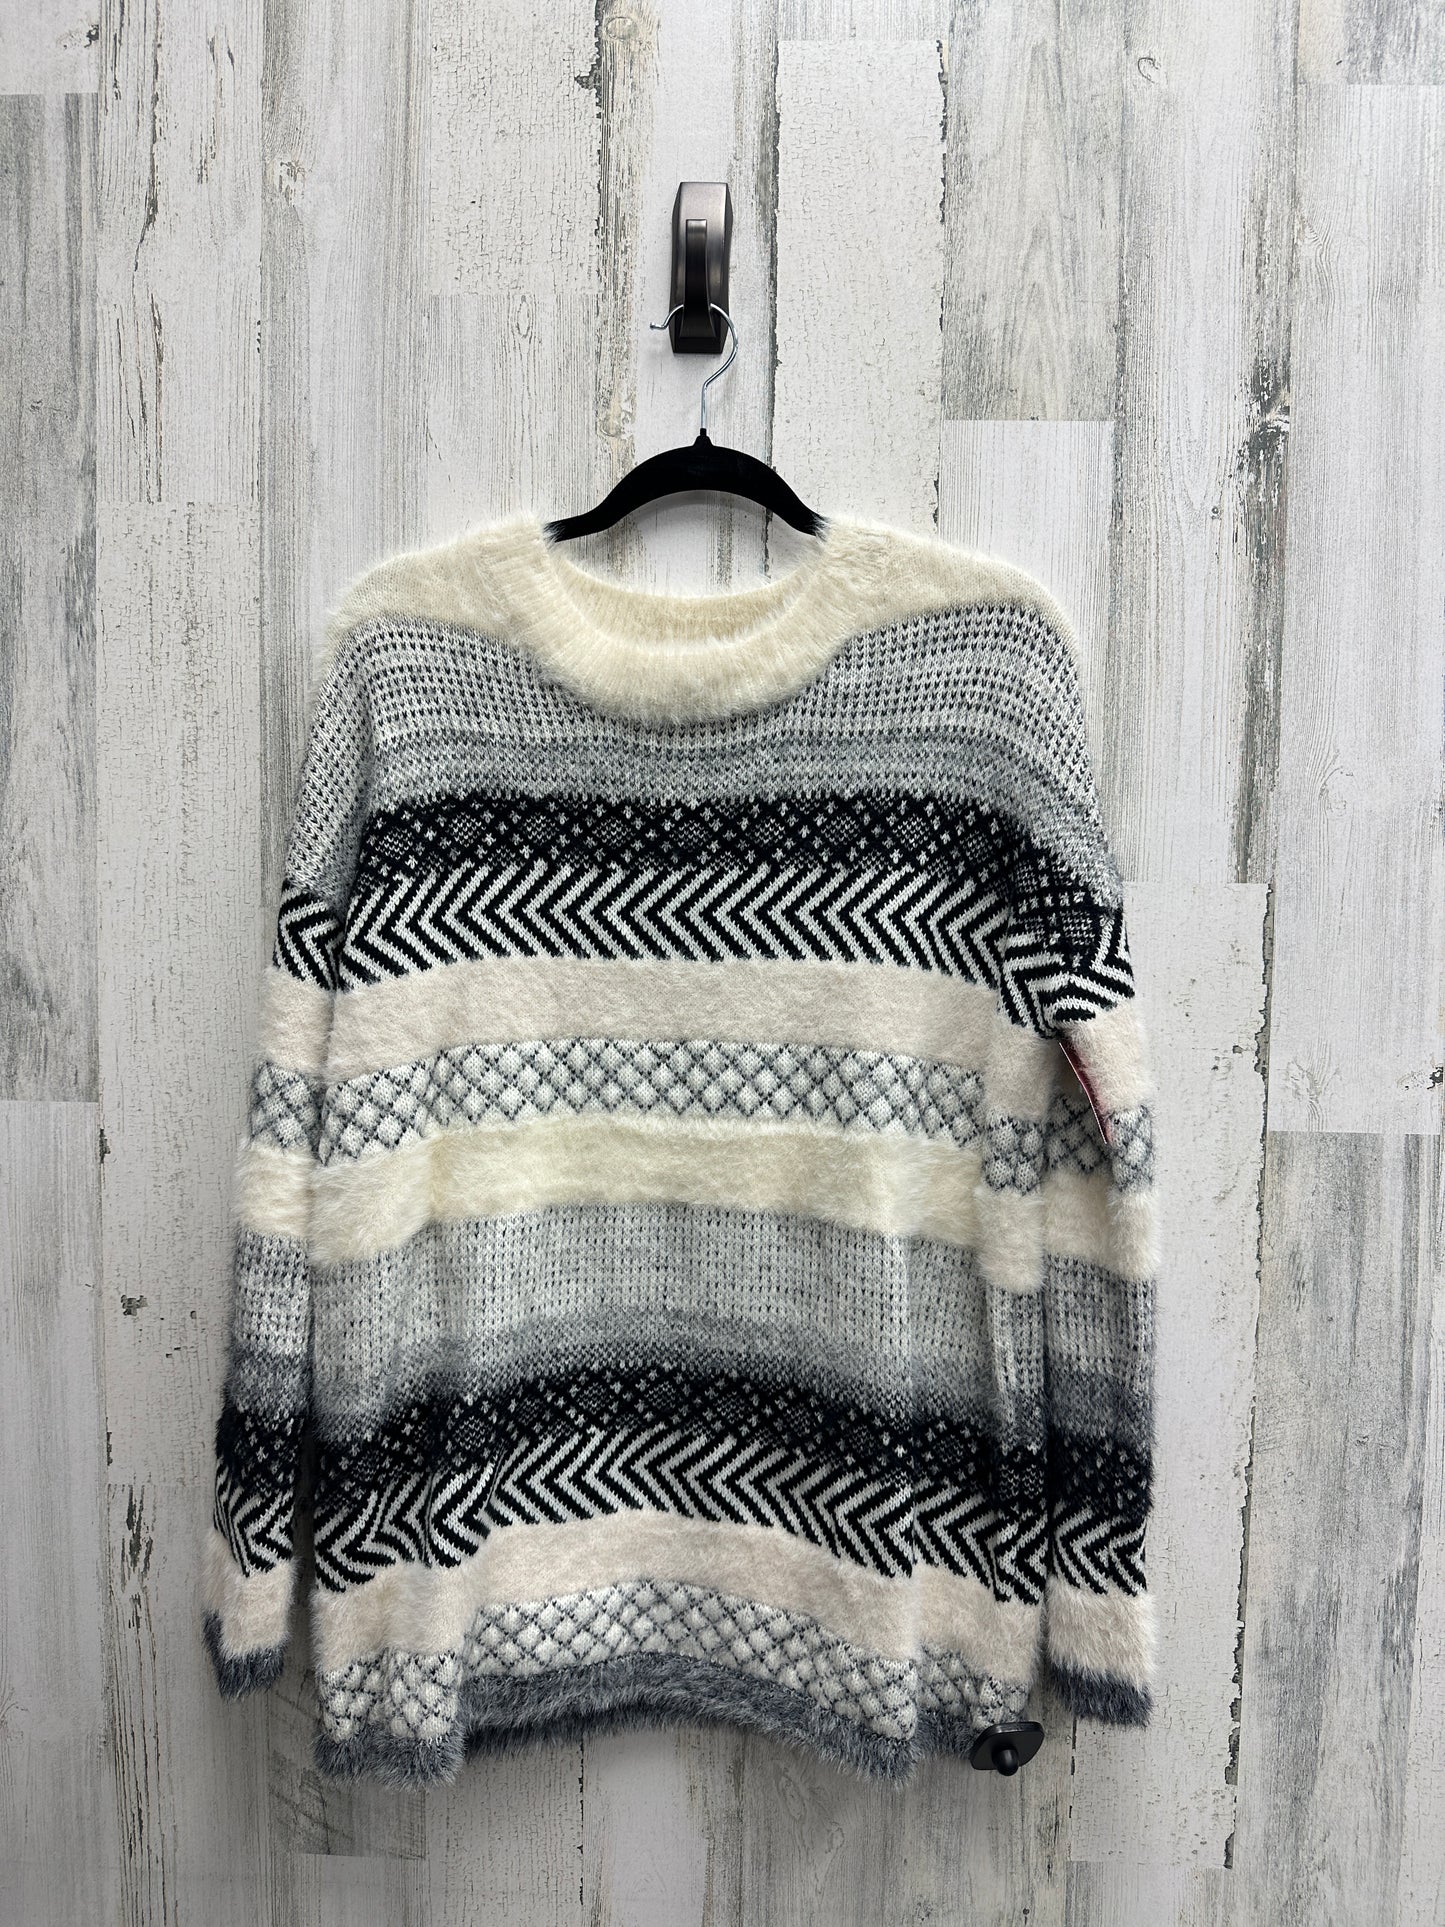 Sweater By Jack By Bb Dakota  Size: L